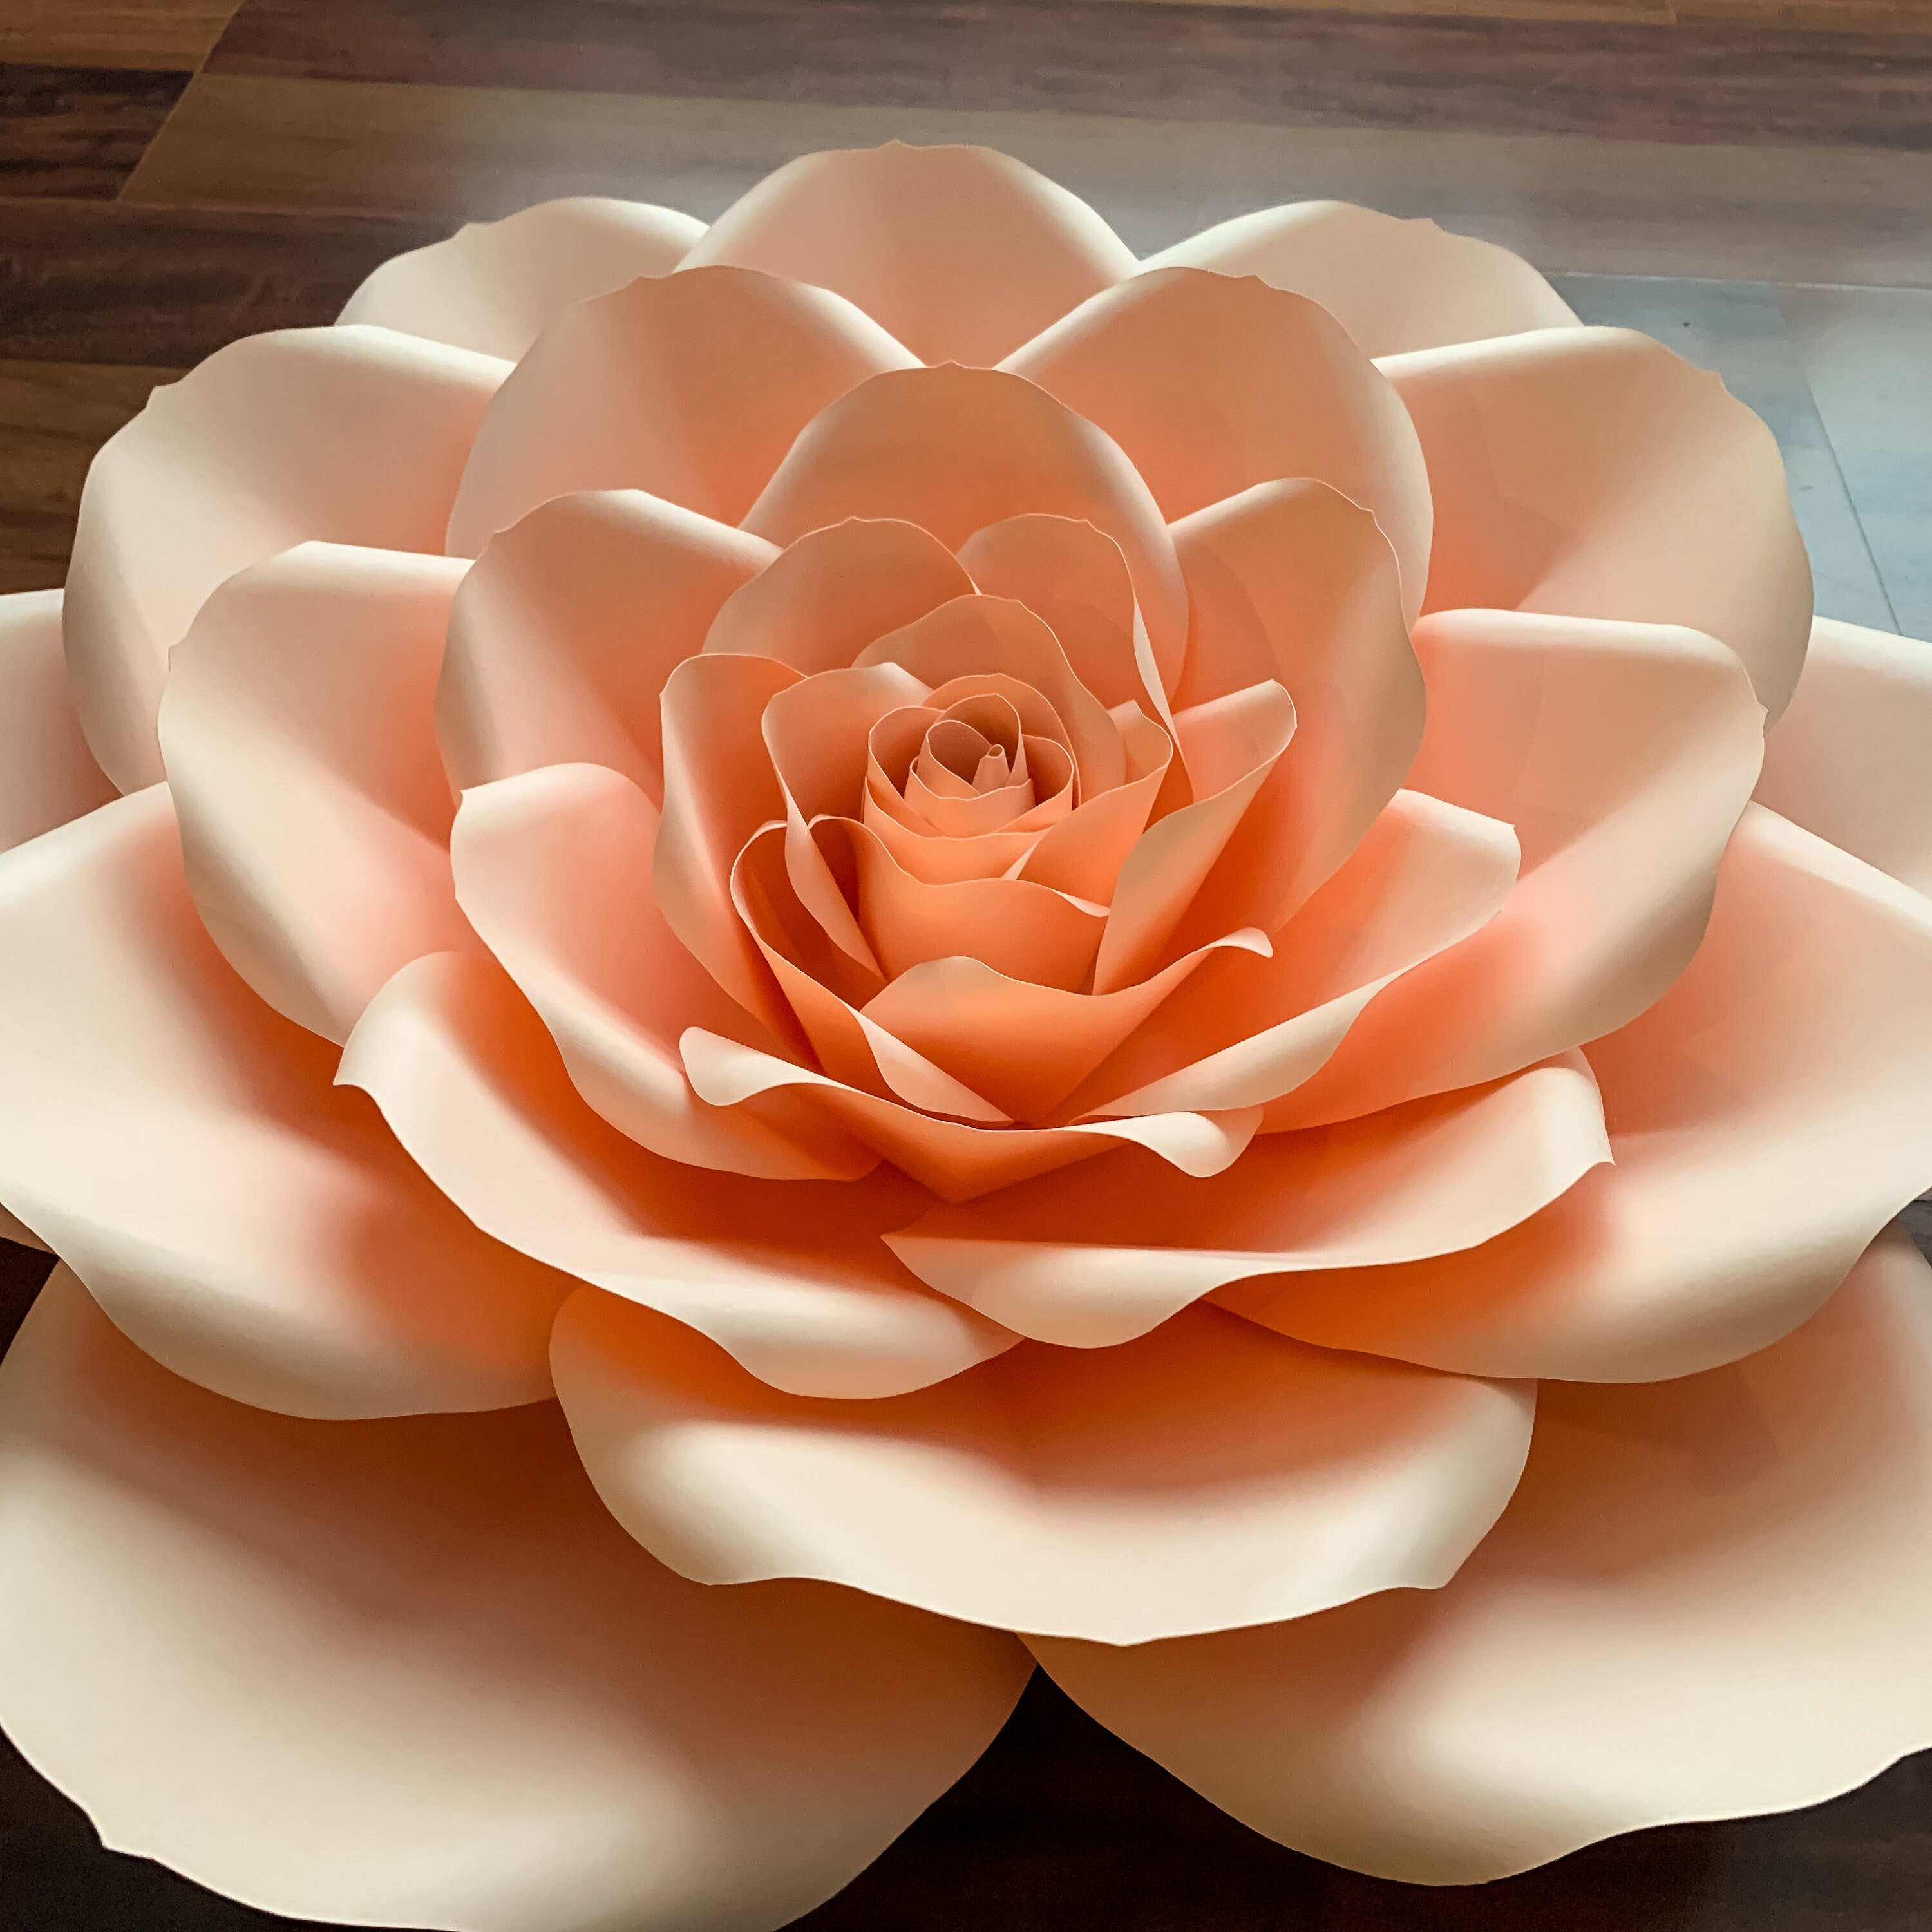 SVG PNG DXF Petal 24 20 Rose Giant Paper Flower Templates w/ Rose bud